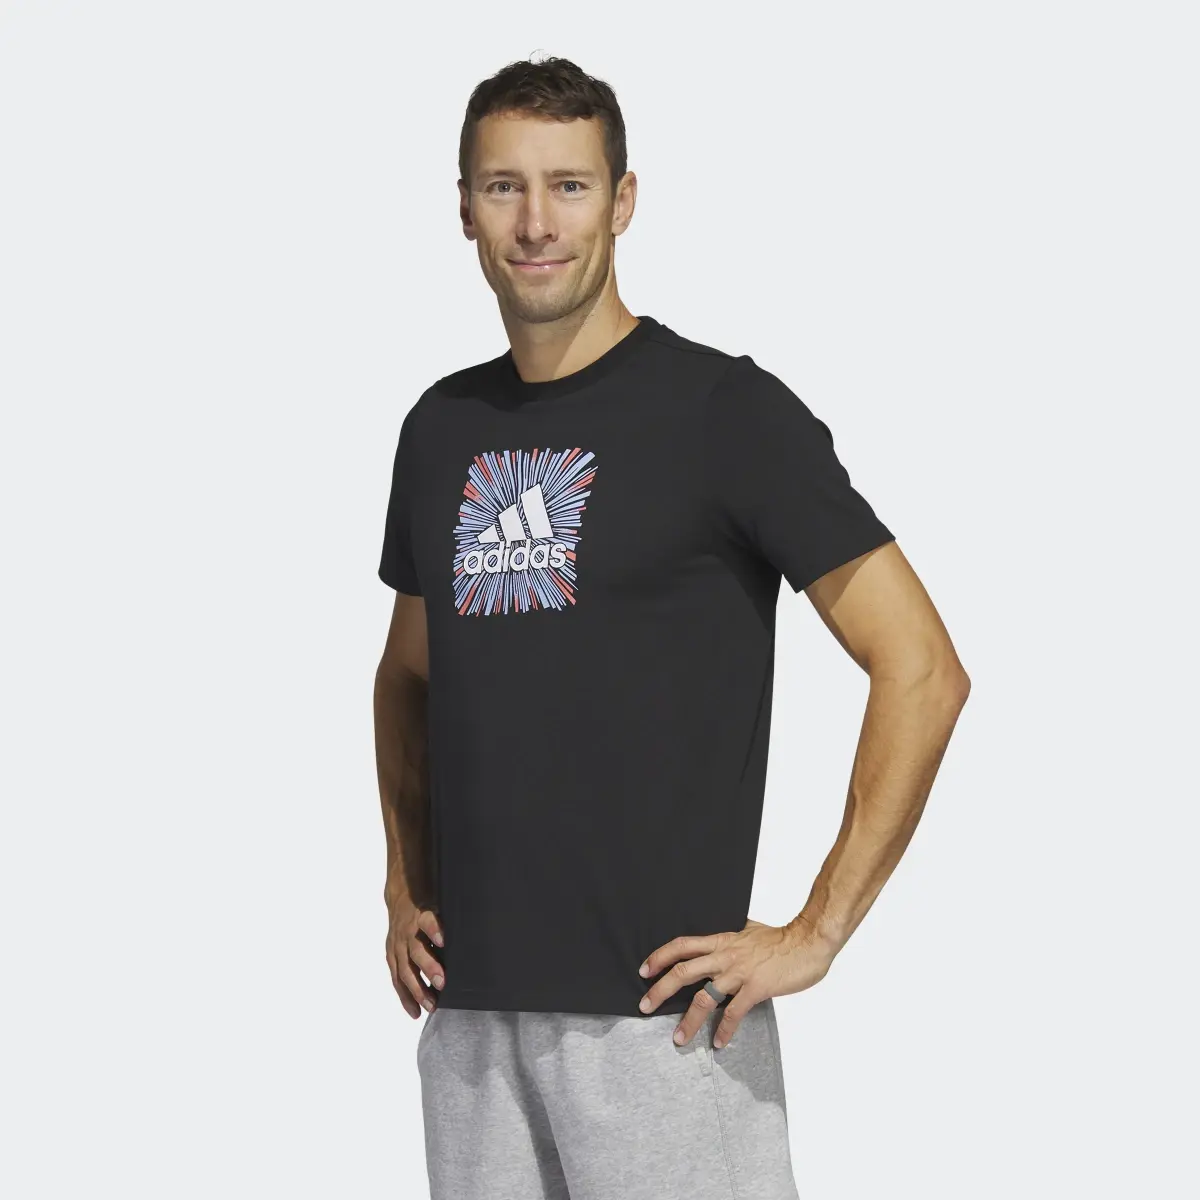 Adidas Sport Optimist Sun Logo Sportswear Graphic T-Shirt (Short Sleeve). 2